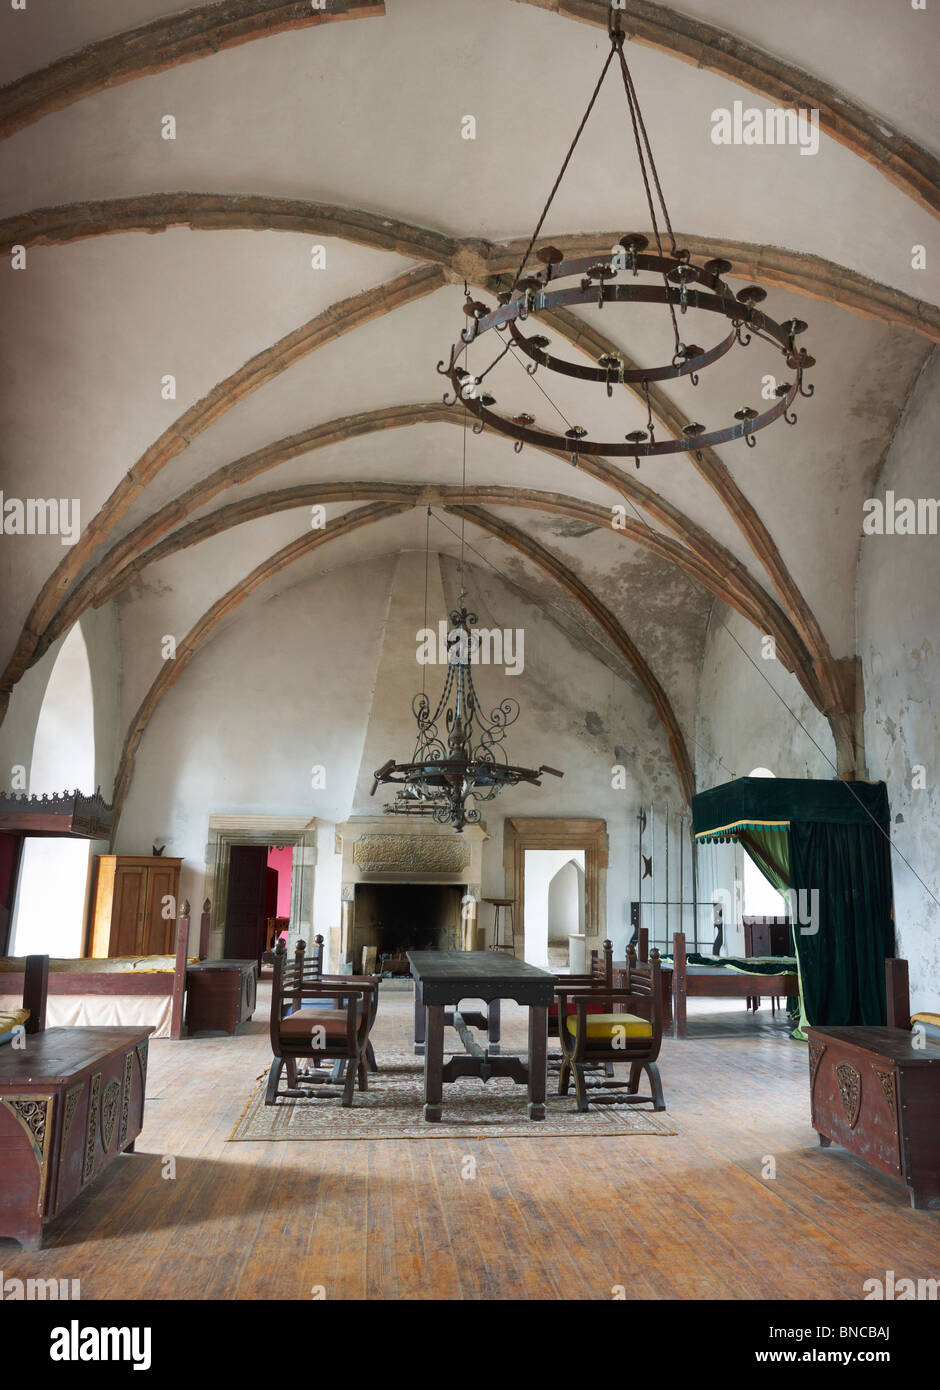 Grodziec - Medieval castle interiors, Silesia, Poland Stock Photo